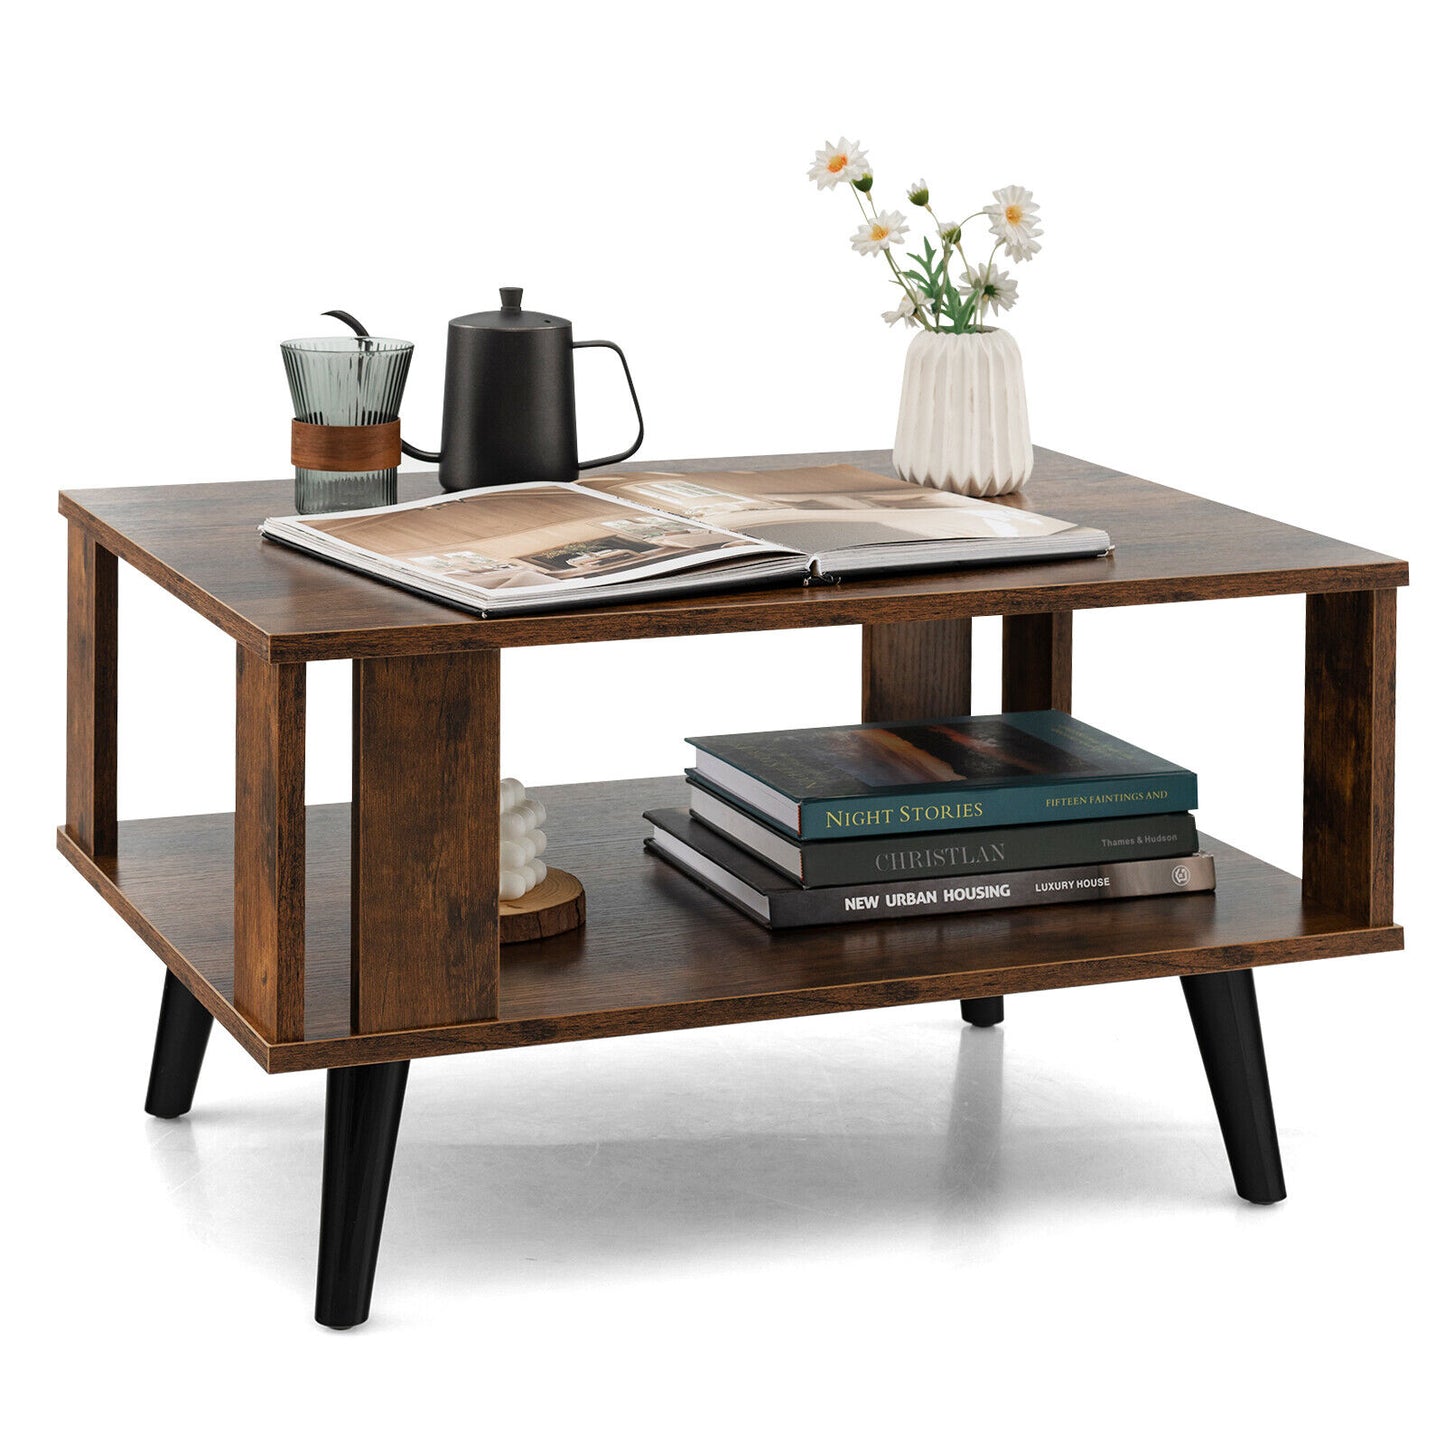 Coffee Table w/ Wooden Storage Open Shelf Retro Mid-Century Rustic Brown